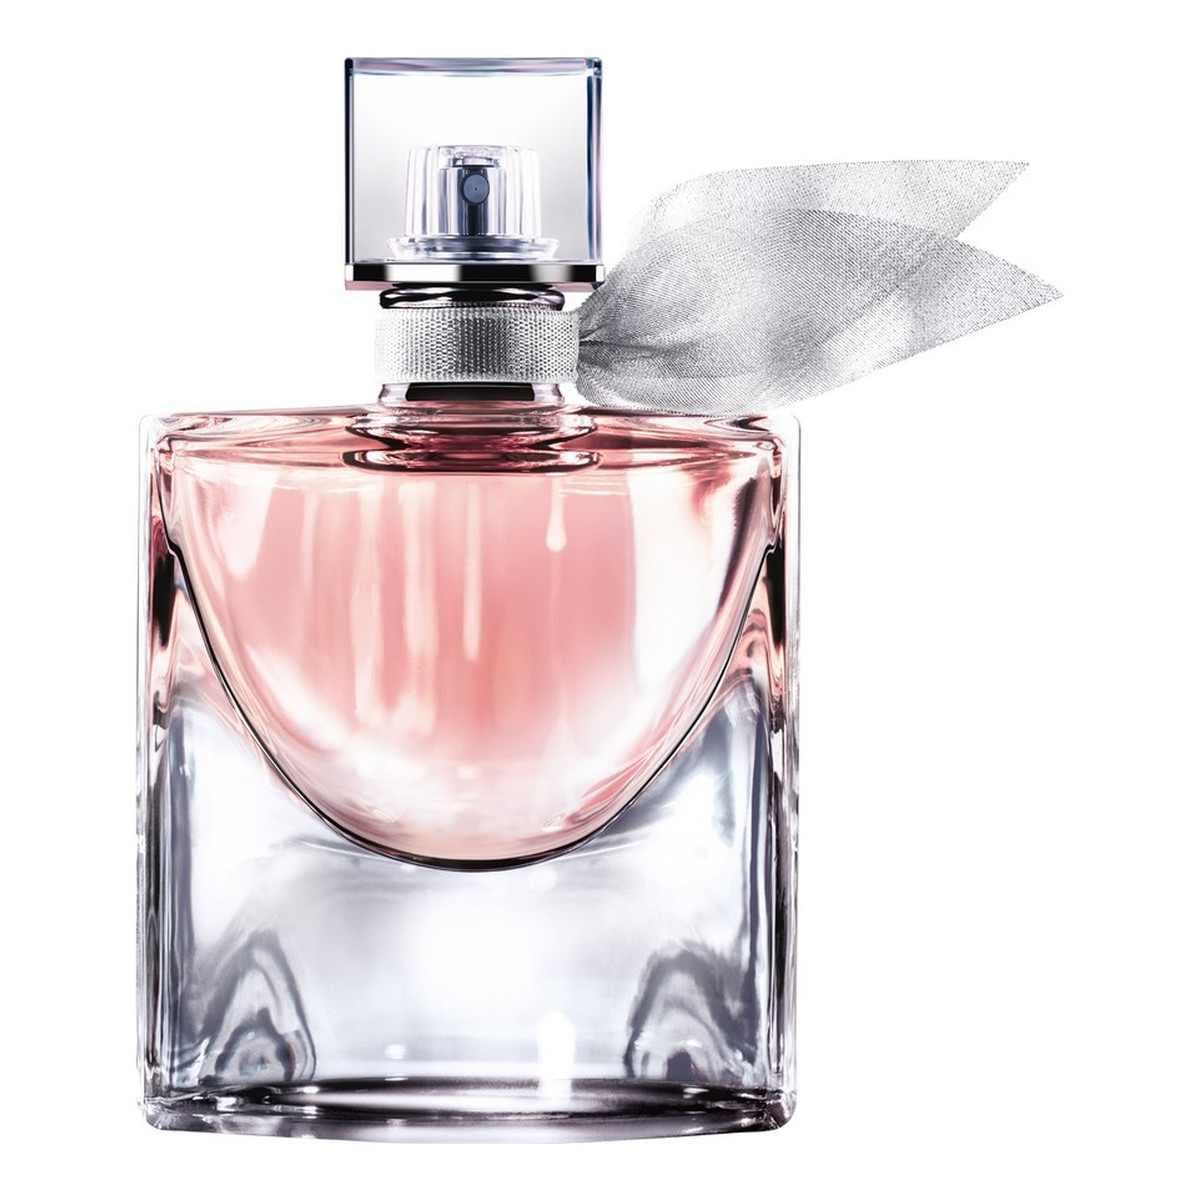 Lancome La Vie Est Belle L`Eau de Parfum Legere Woda perfumowana spray 50ml